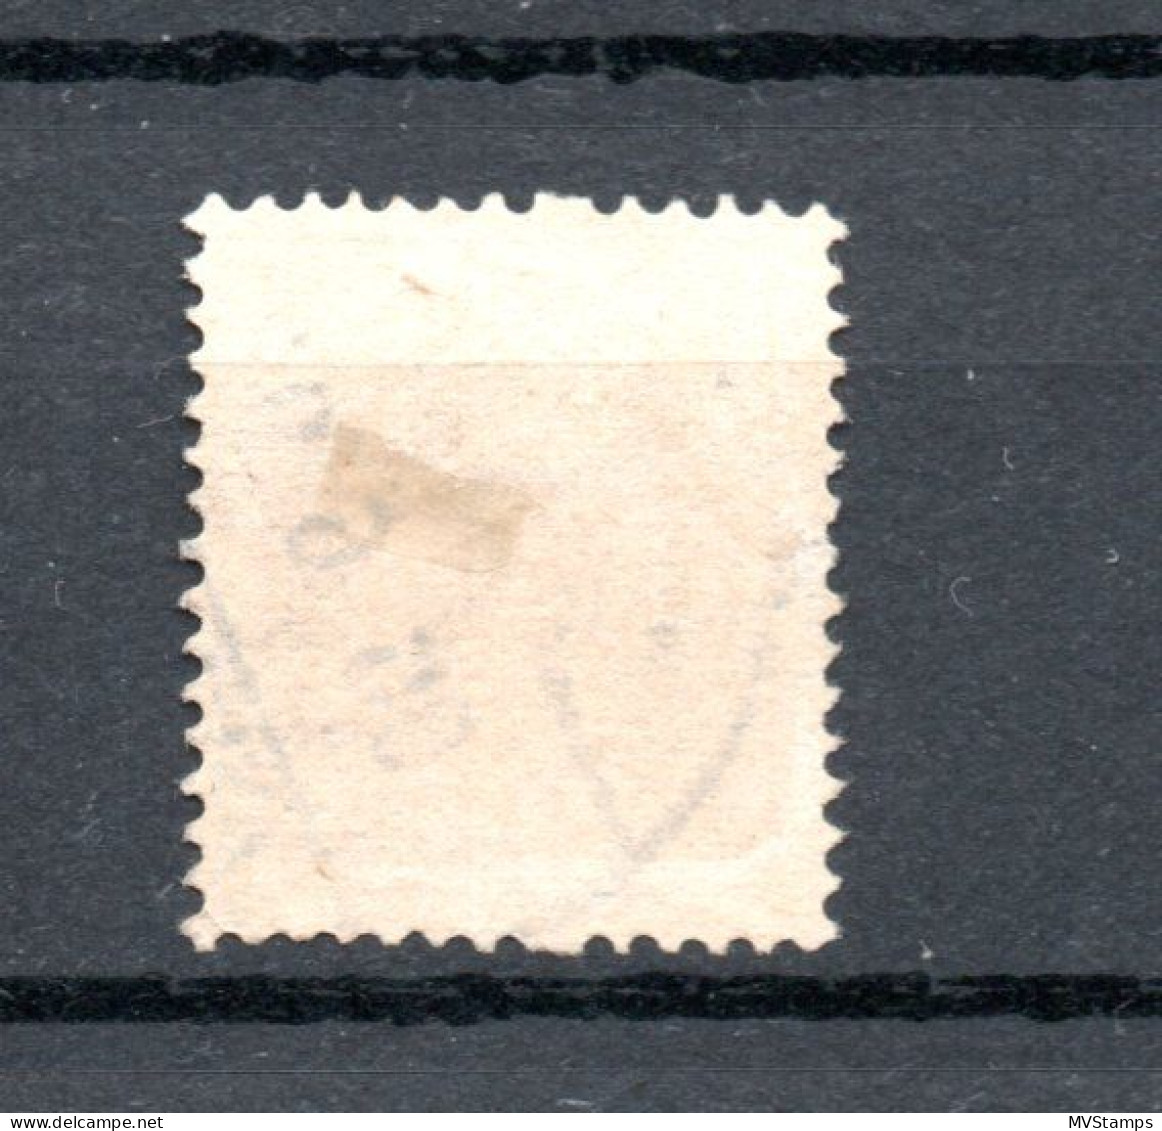 Iceland 1882 Old Posthorn Stamp (Michel 12 A), Misperforation Used - Gebruikt